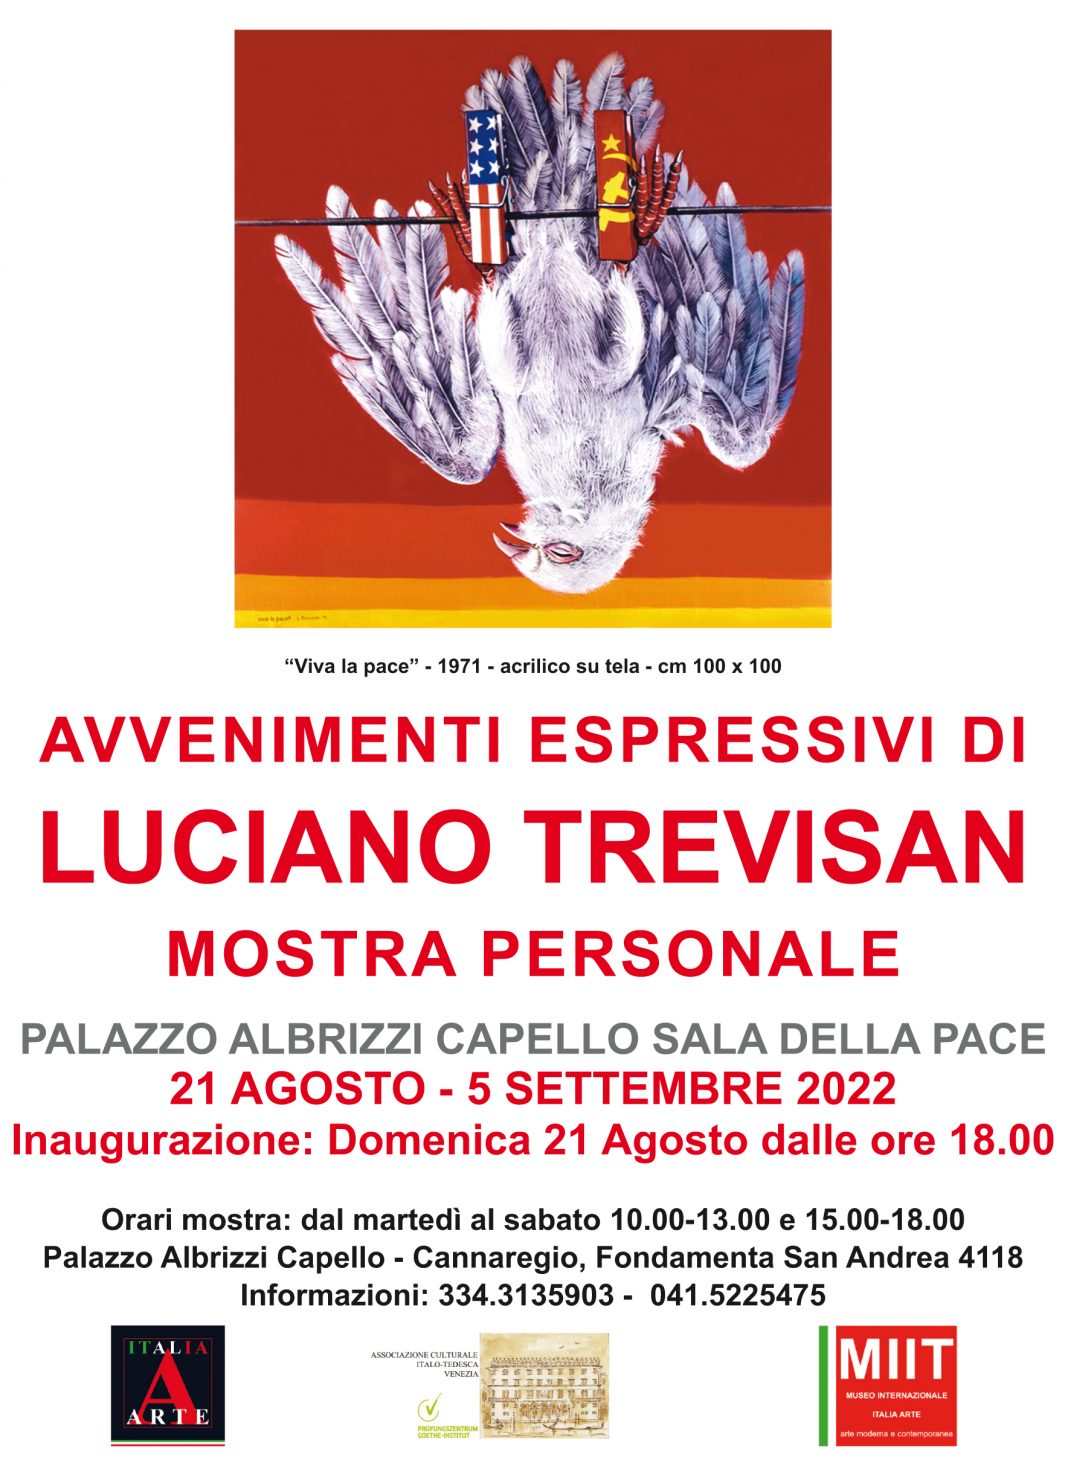 Luciano Trevisan – Avvenimenti espressivihttps://www.exibart.com/repository/media/formidable/11/img/438/invito-trevisan-1068x1457.jpg